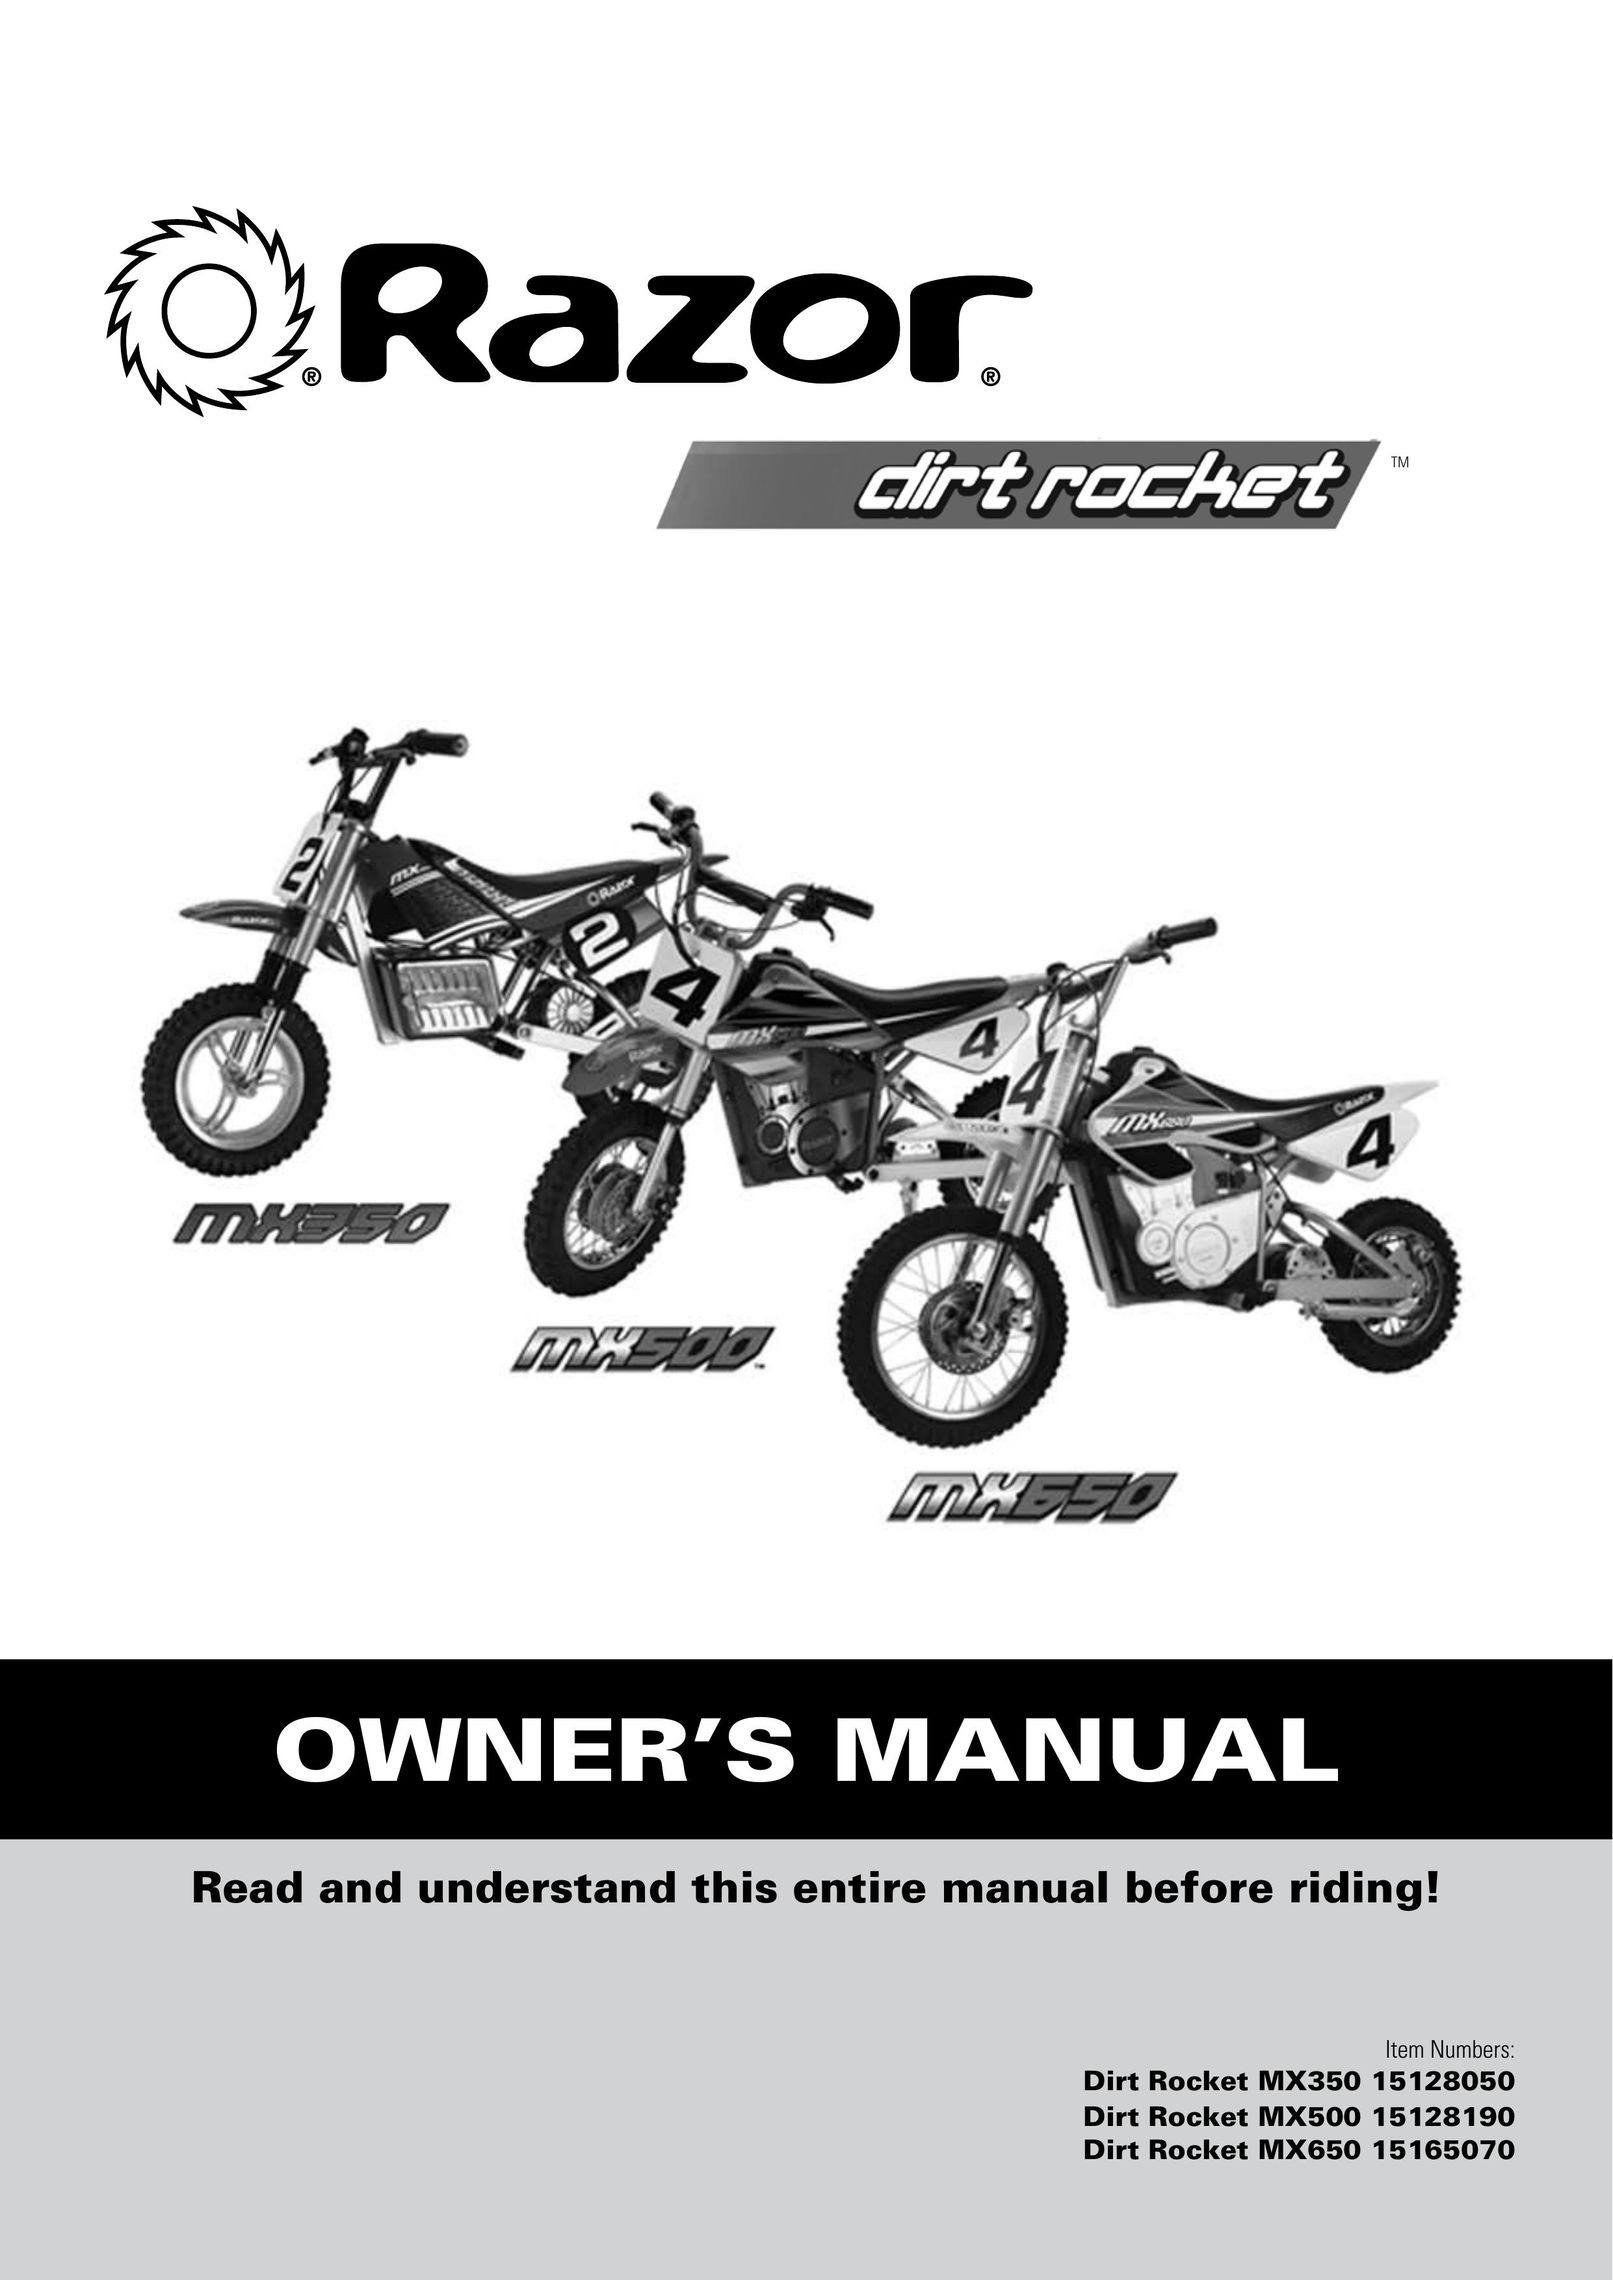 Razor MX500 15128190 Bicycle User Manual